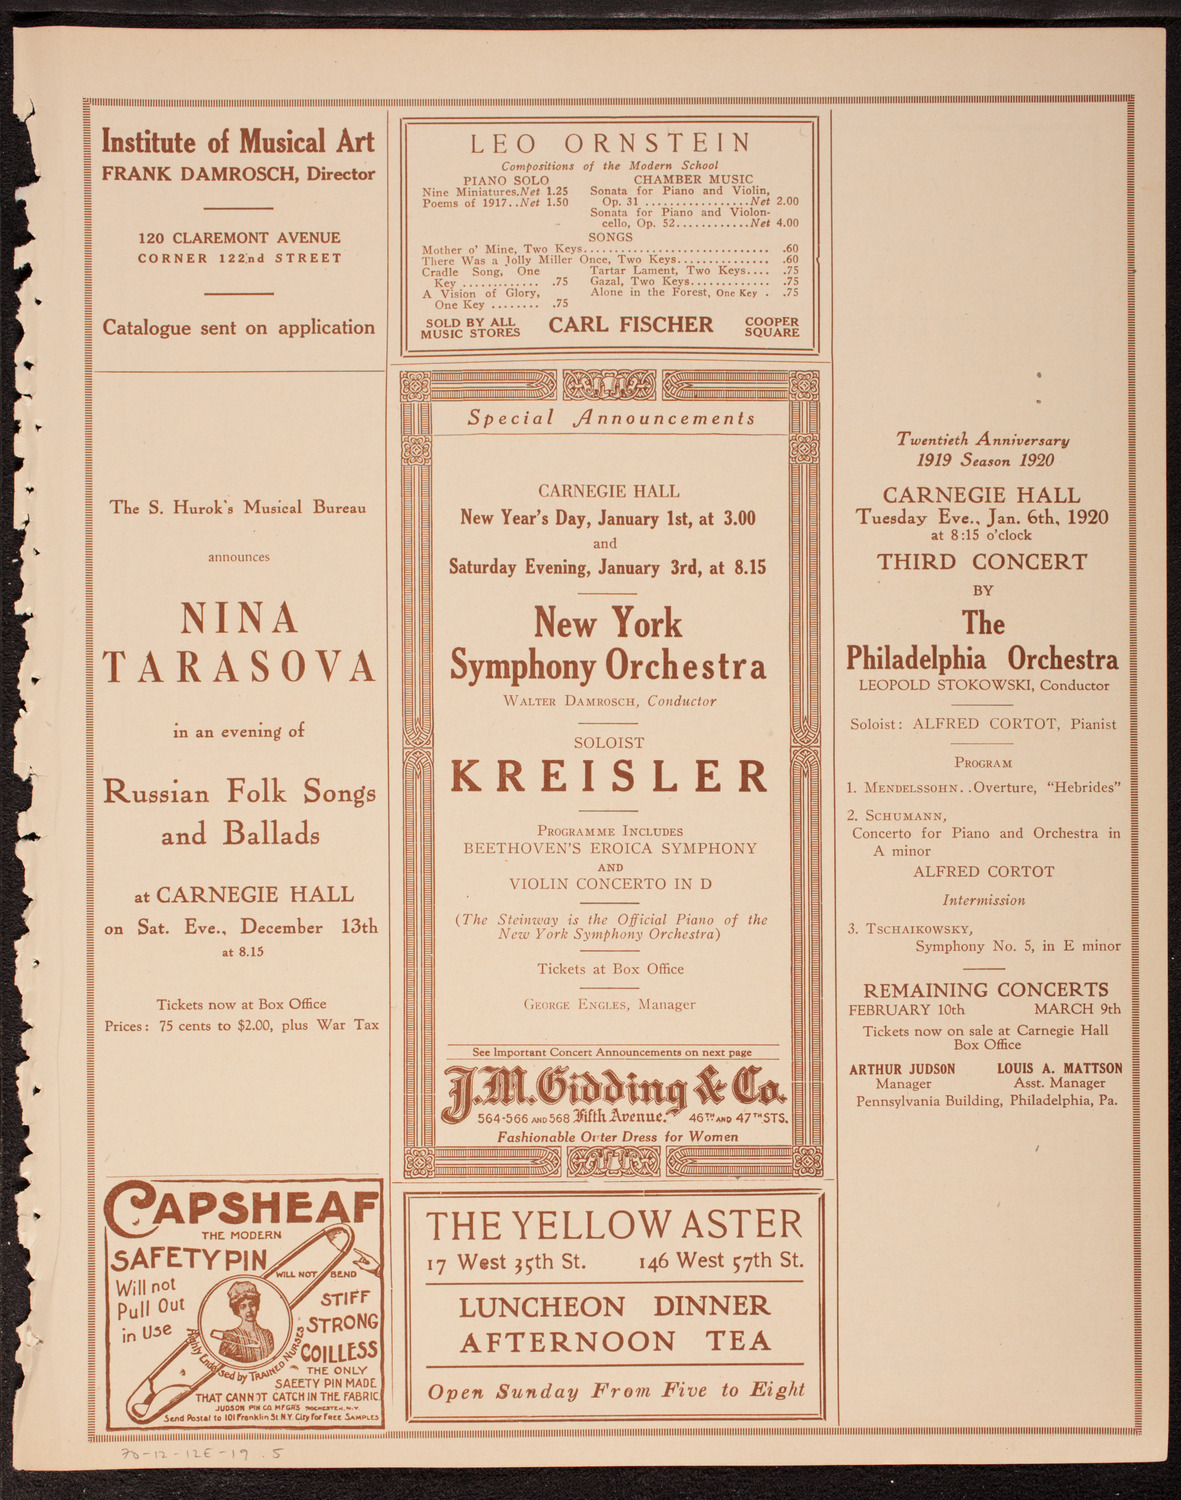 Clef Club Memorial Fund Concert in honor of James Reese Europe, December 12, 1919, program page 9